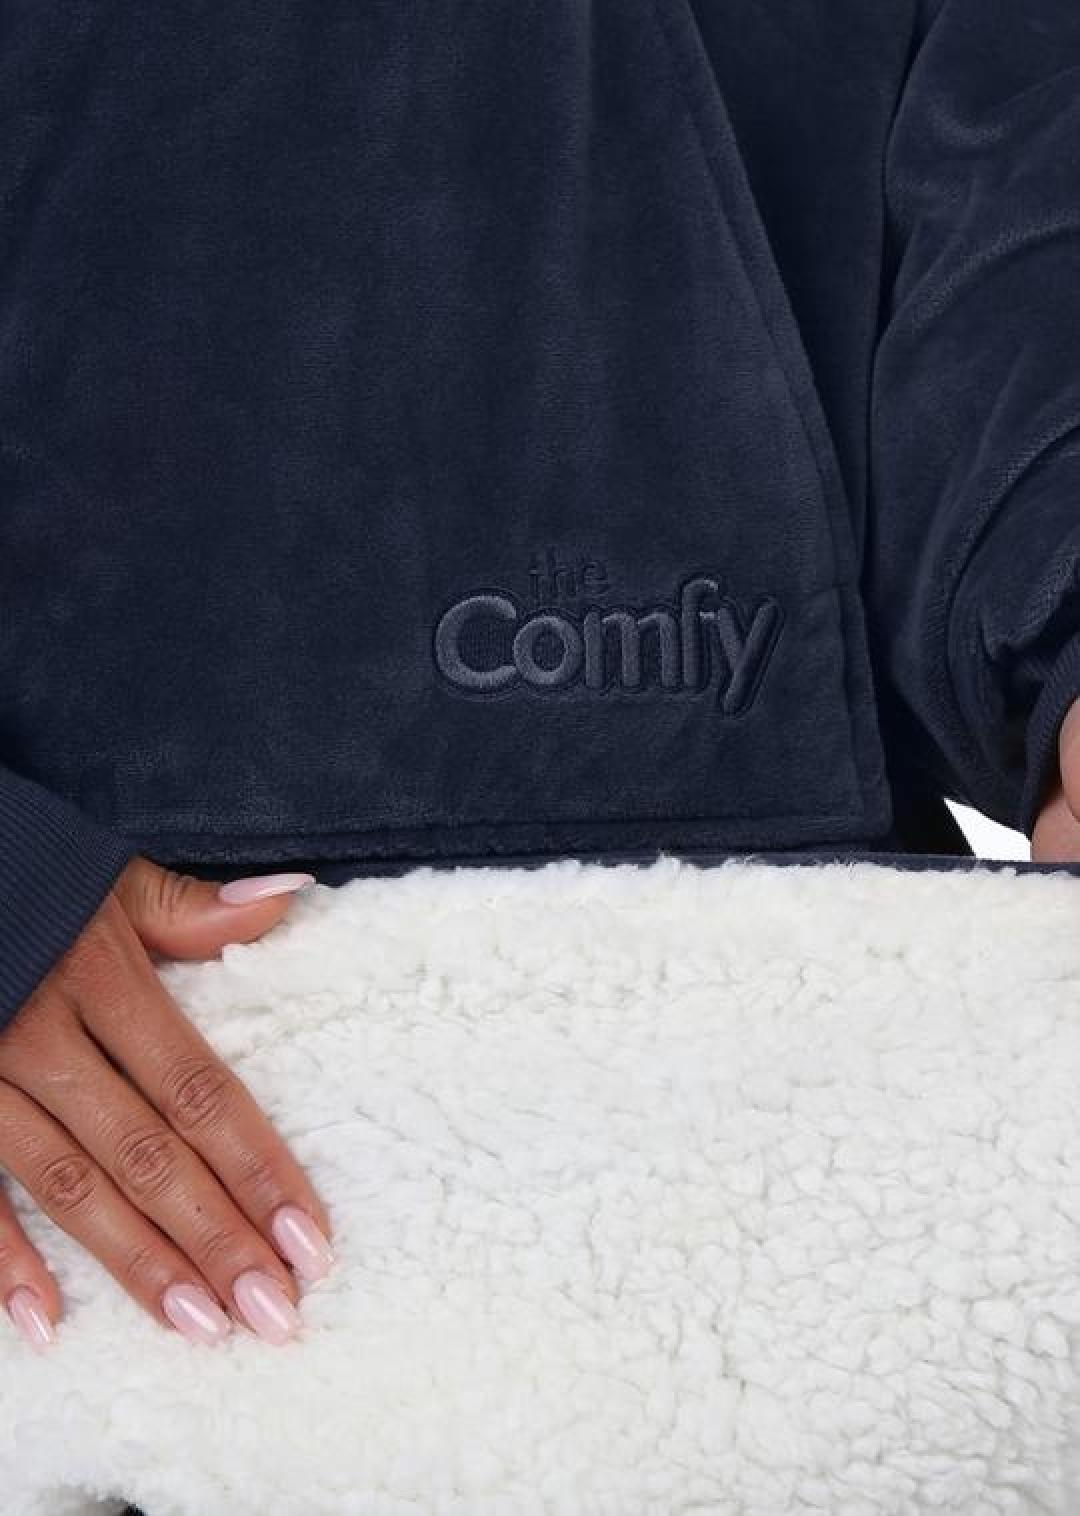 The Comfy Original Wearable Blanket